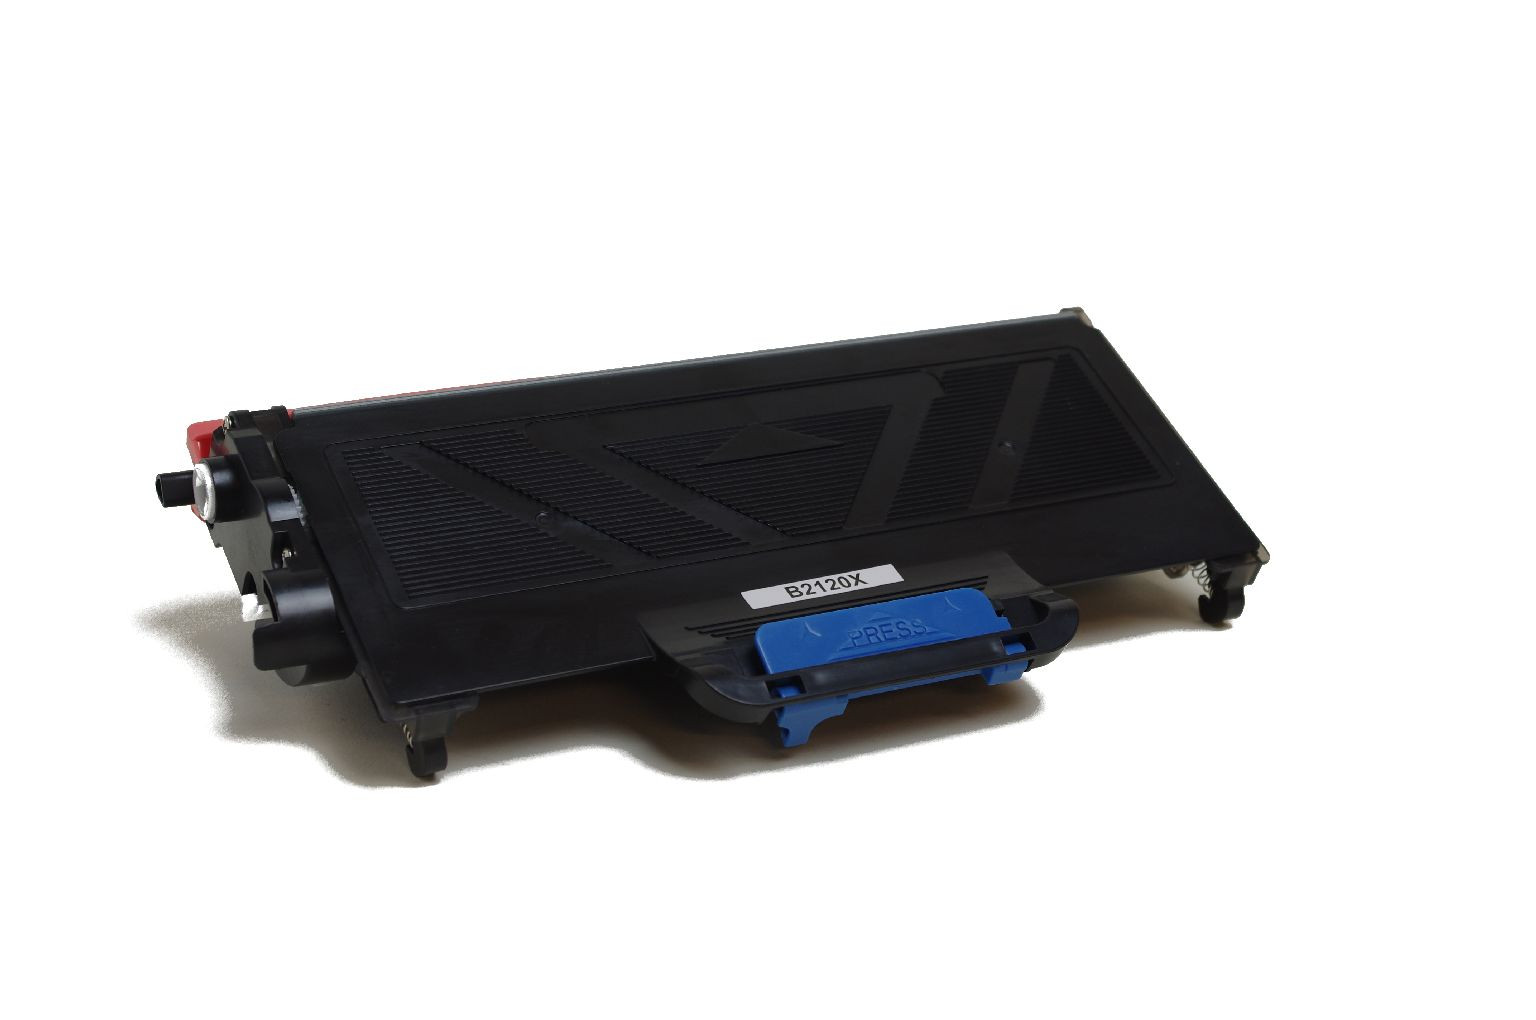 Toner-Cartridge for TN2120 black compatible 177 ✓ cheap at ASC